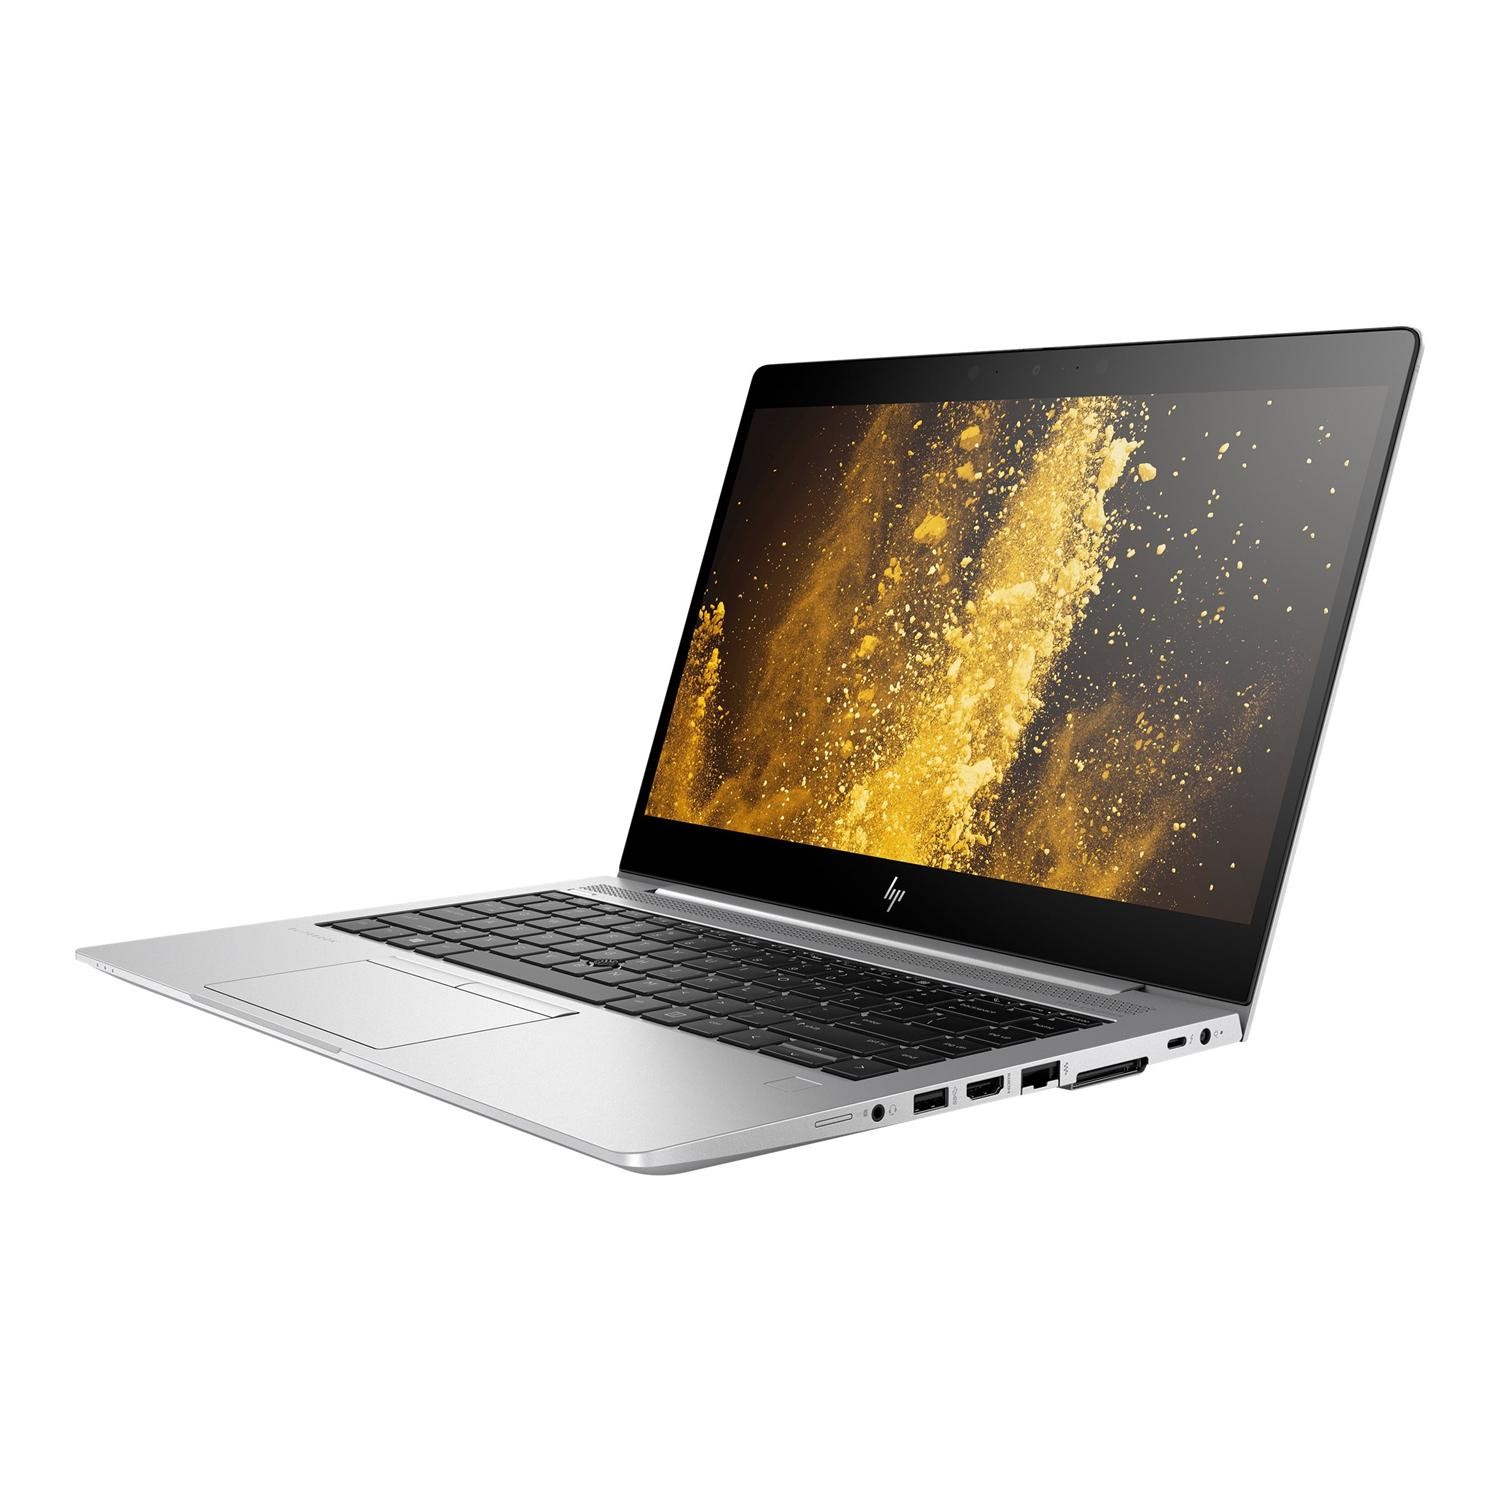 Hp Elitebook 840 G6 Core I7 8565u 8gb 256gb Ssd 14 Inch Windows 10 Pro Laptop Laptops Direct